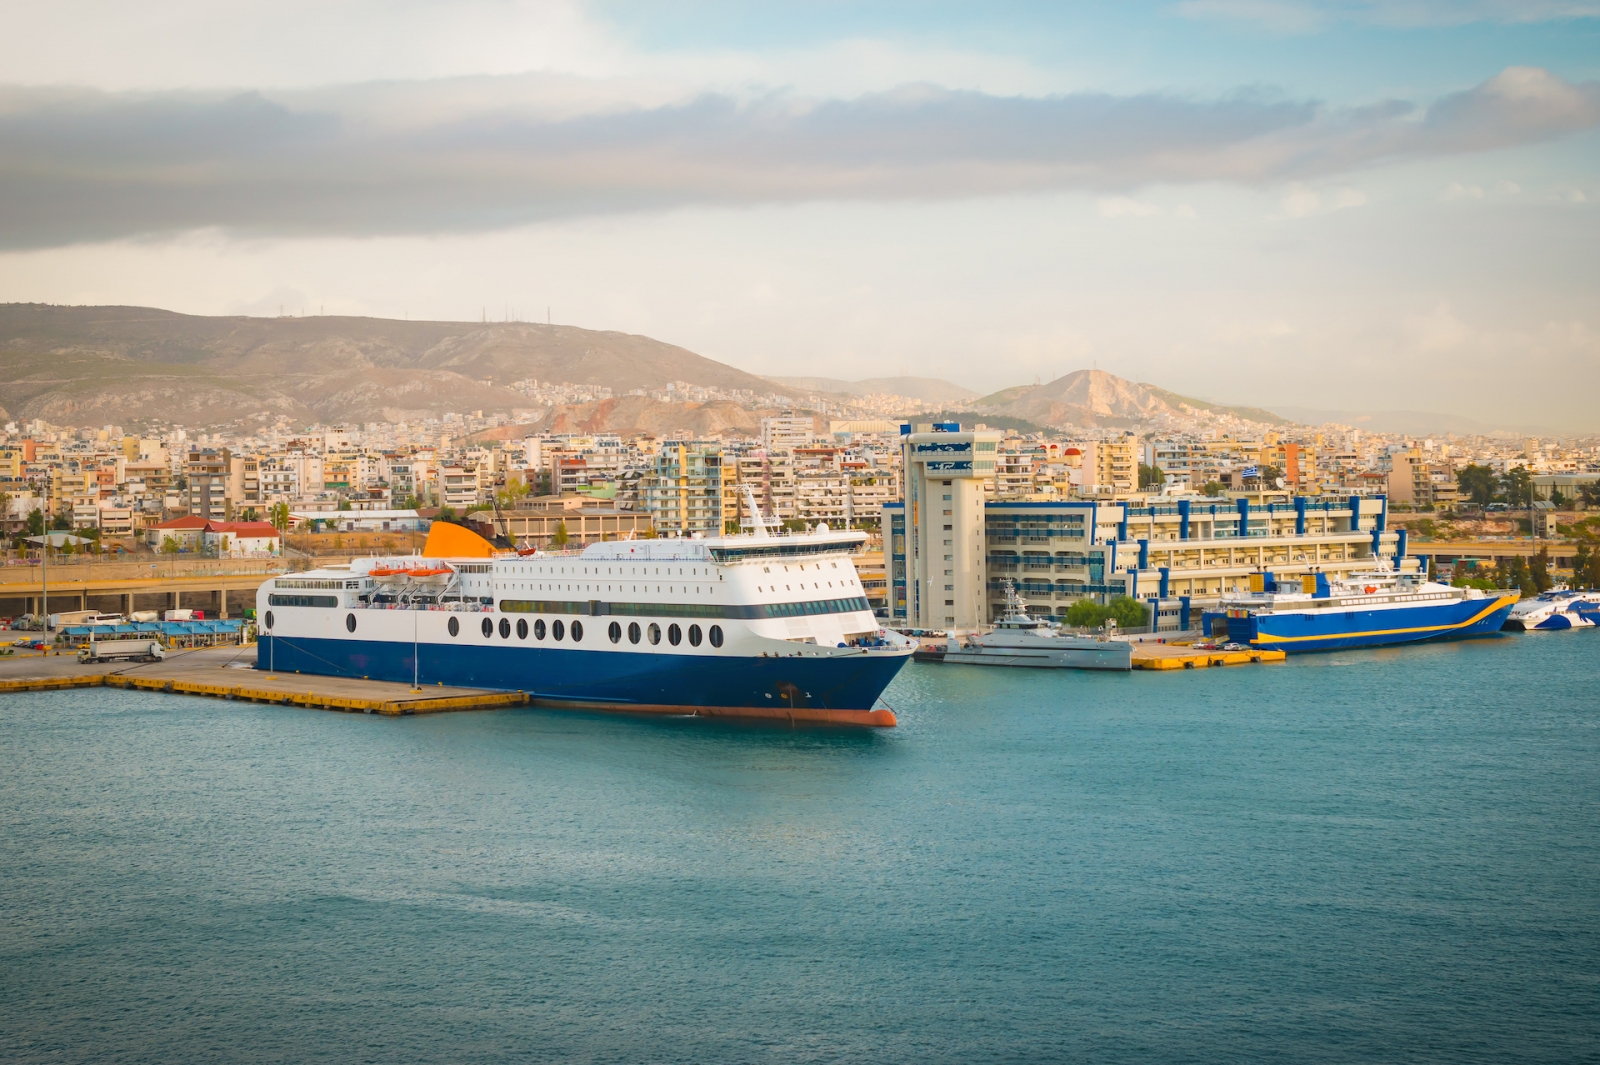 Ferry boat docked in port of Piraeus, Greece